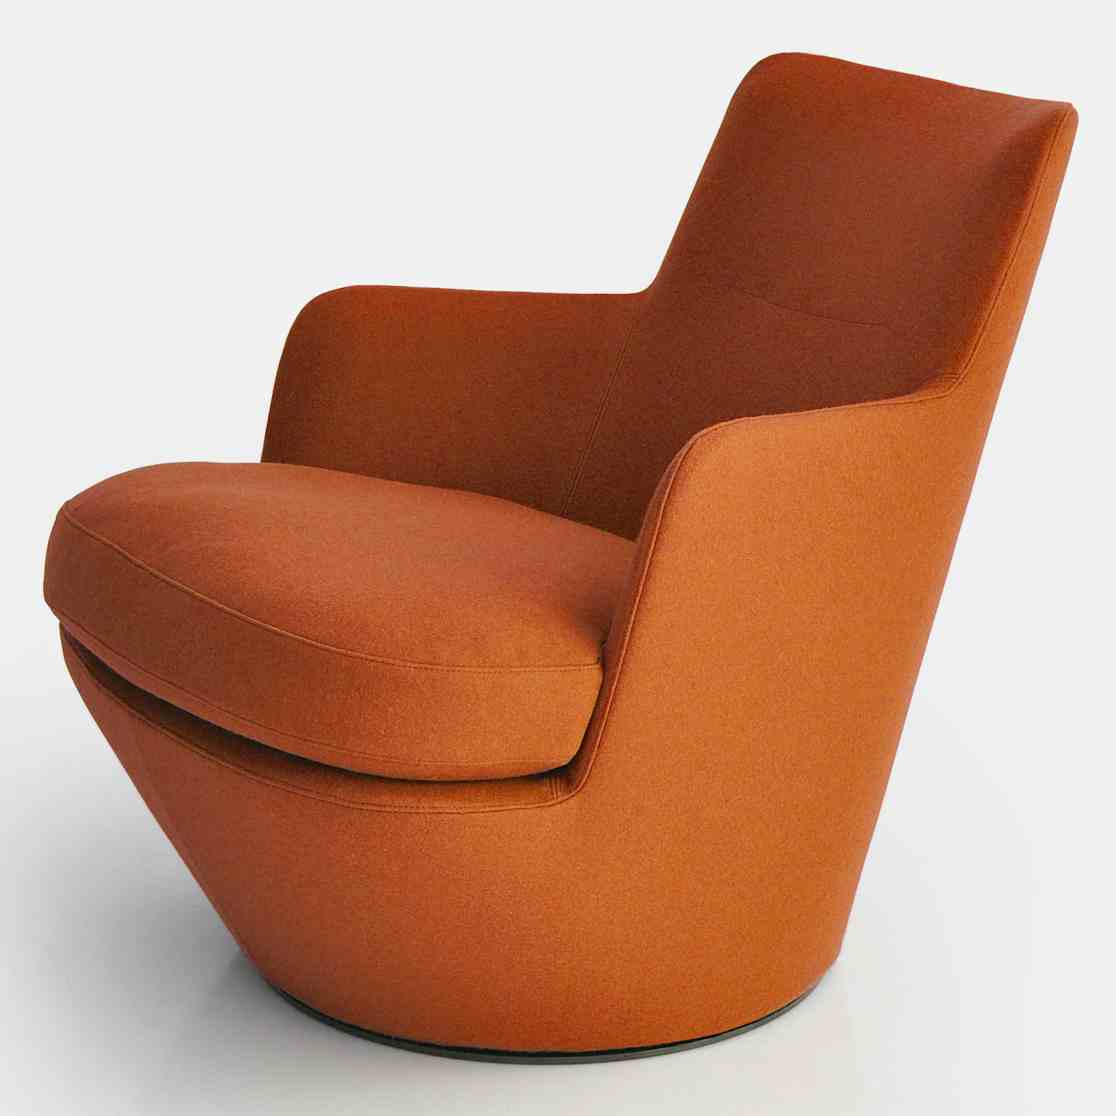 Bensen furniture lo turn chair orange haute living